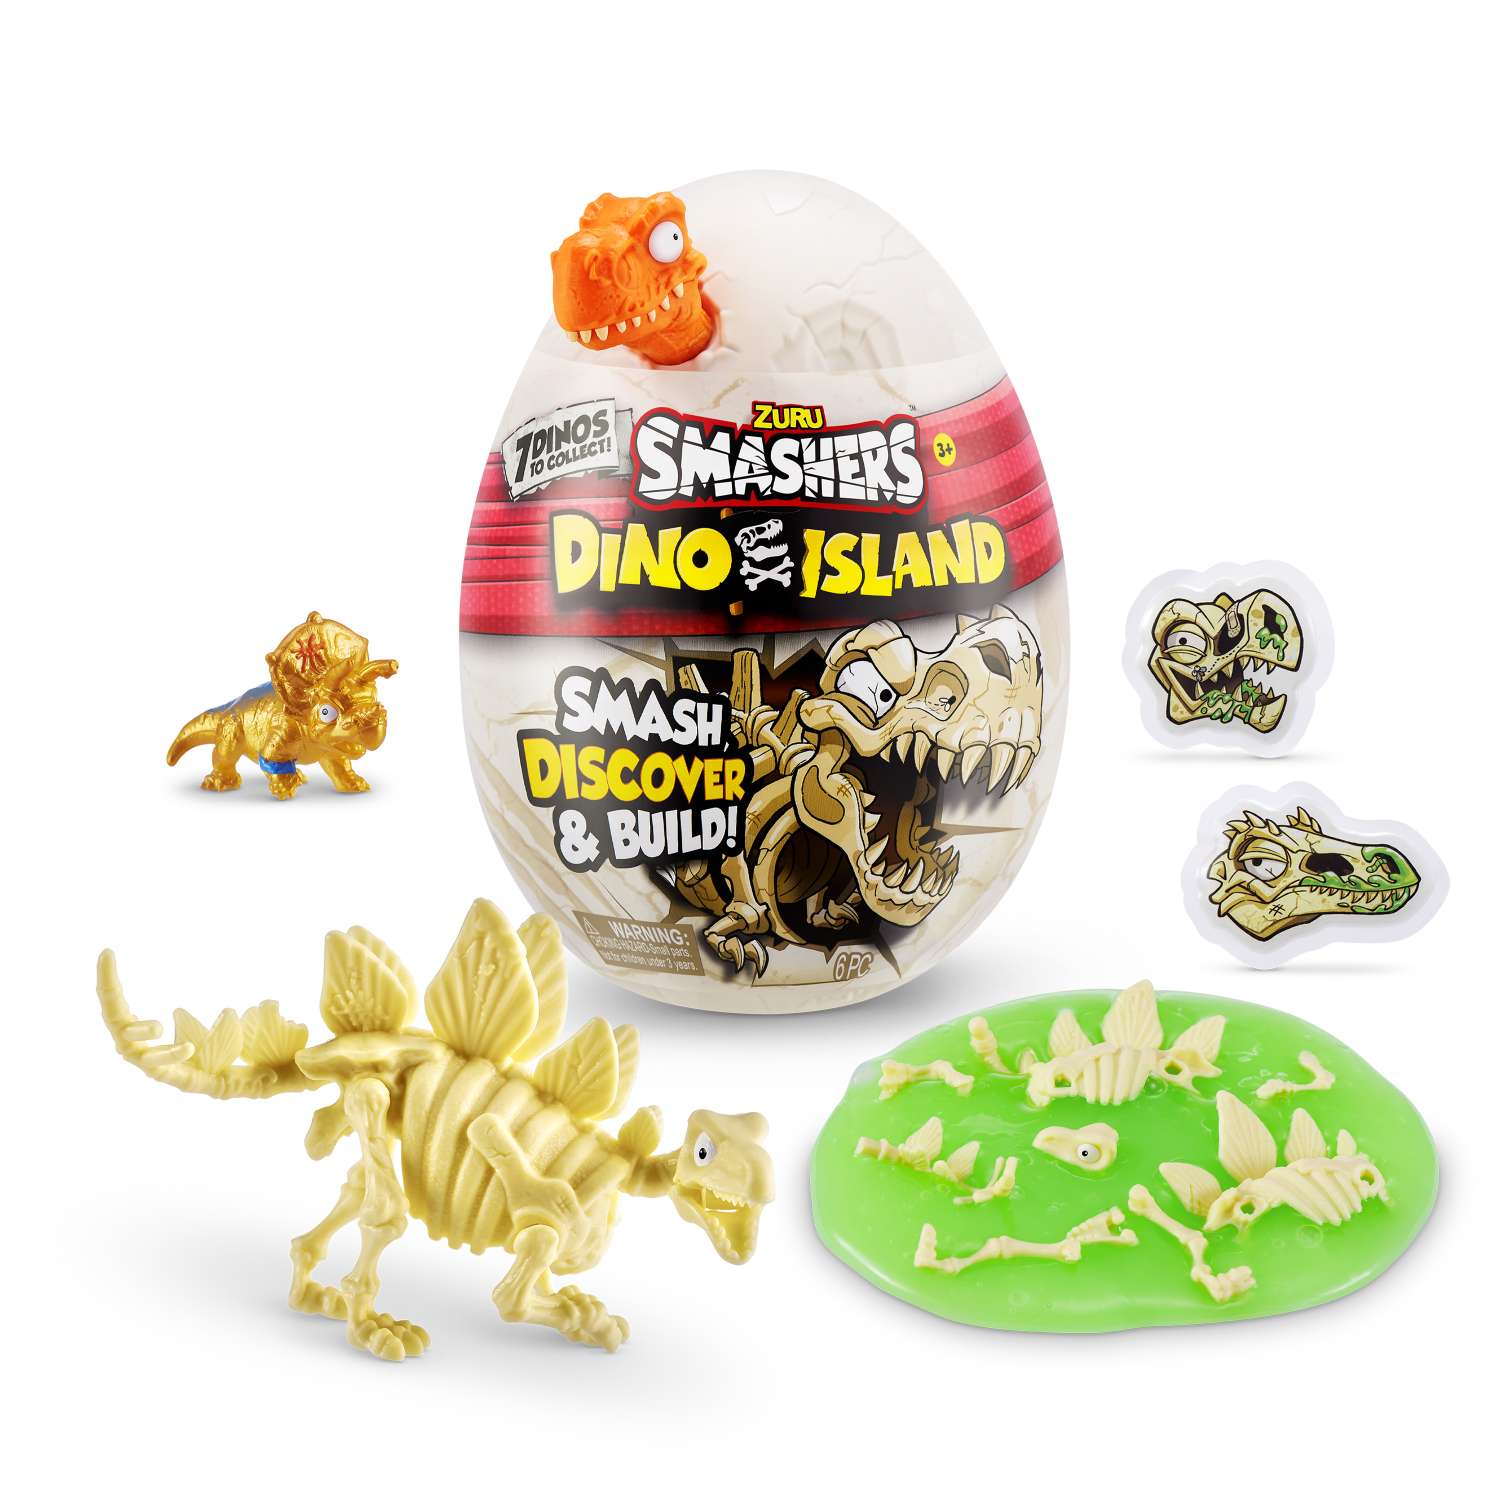 Набор игровой Smashers Остров динозавров нано 7495SQ1 Smashers 7495SQ1-S002 - фото 11